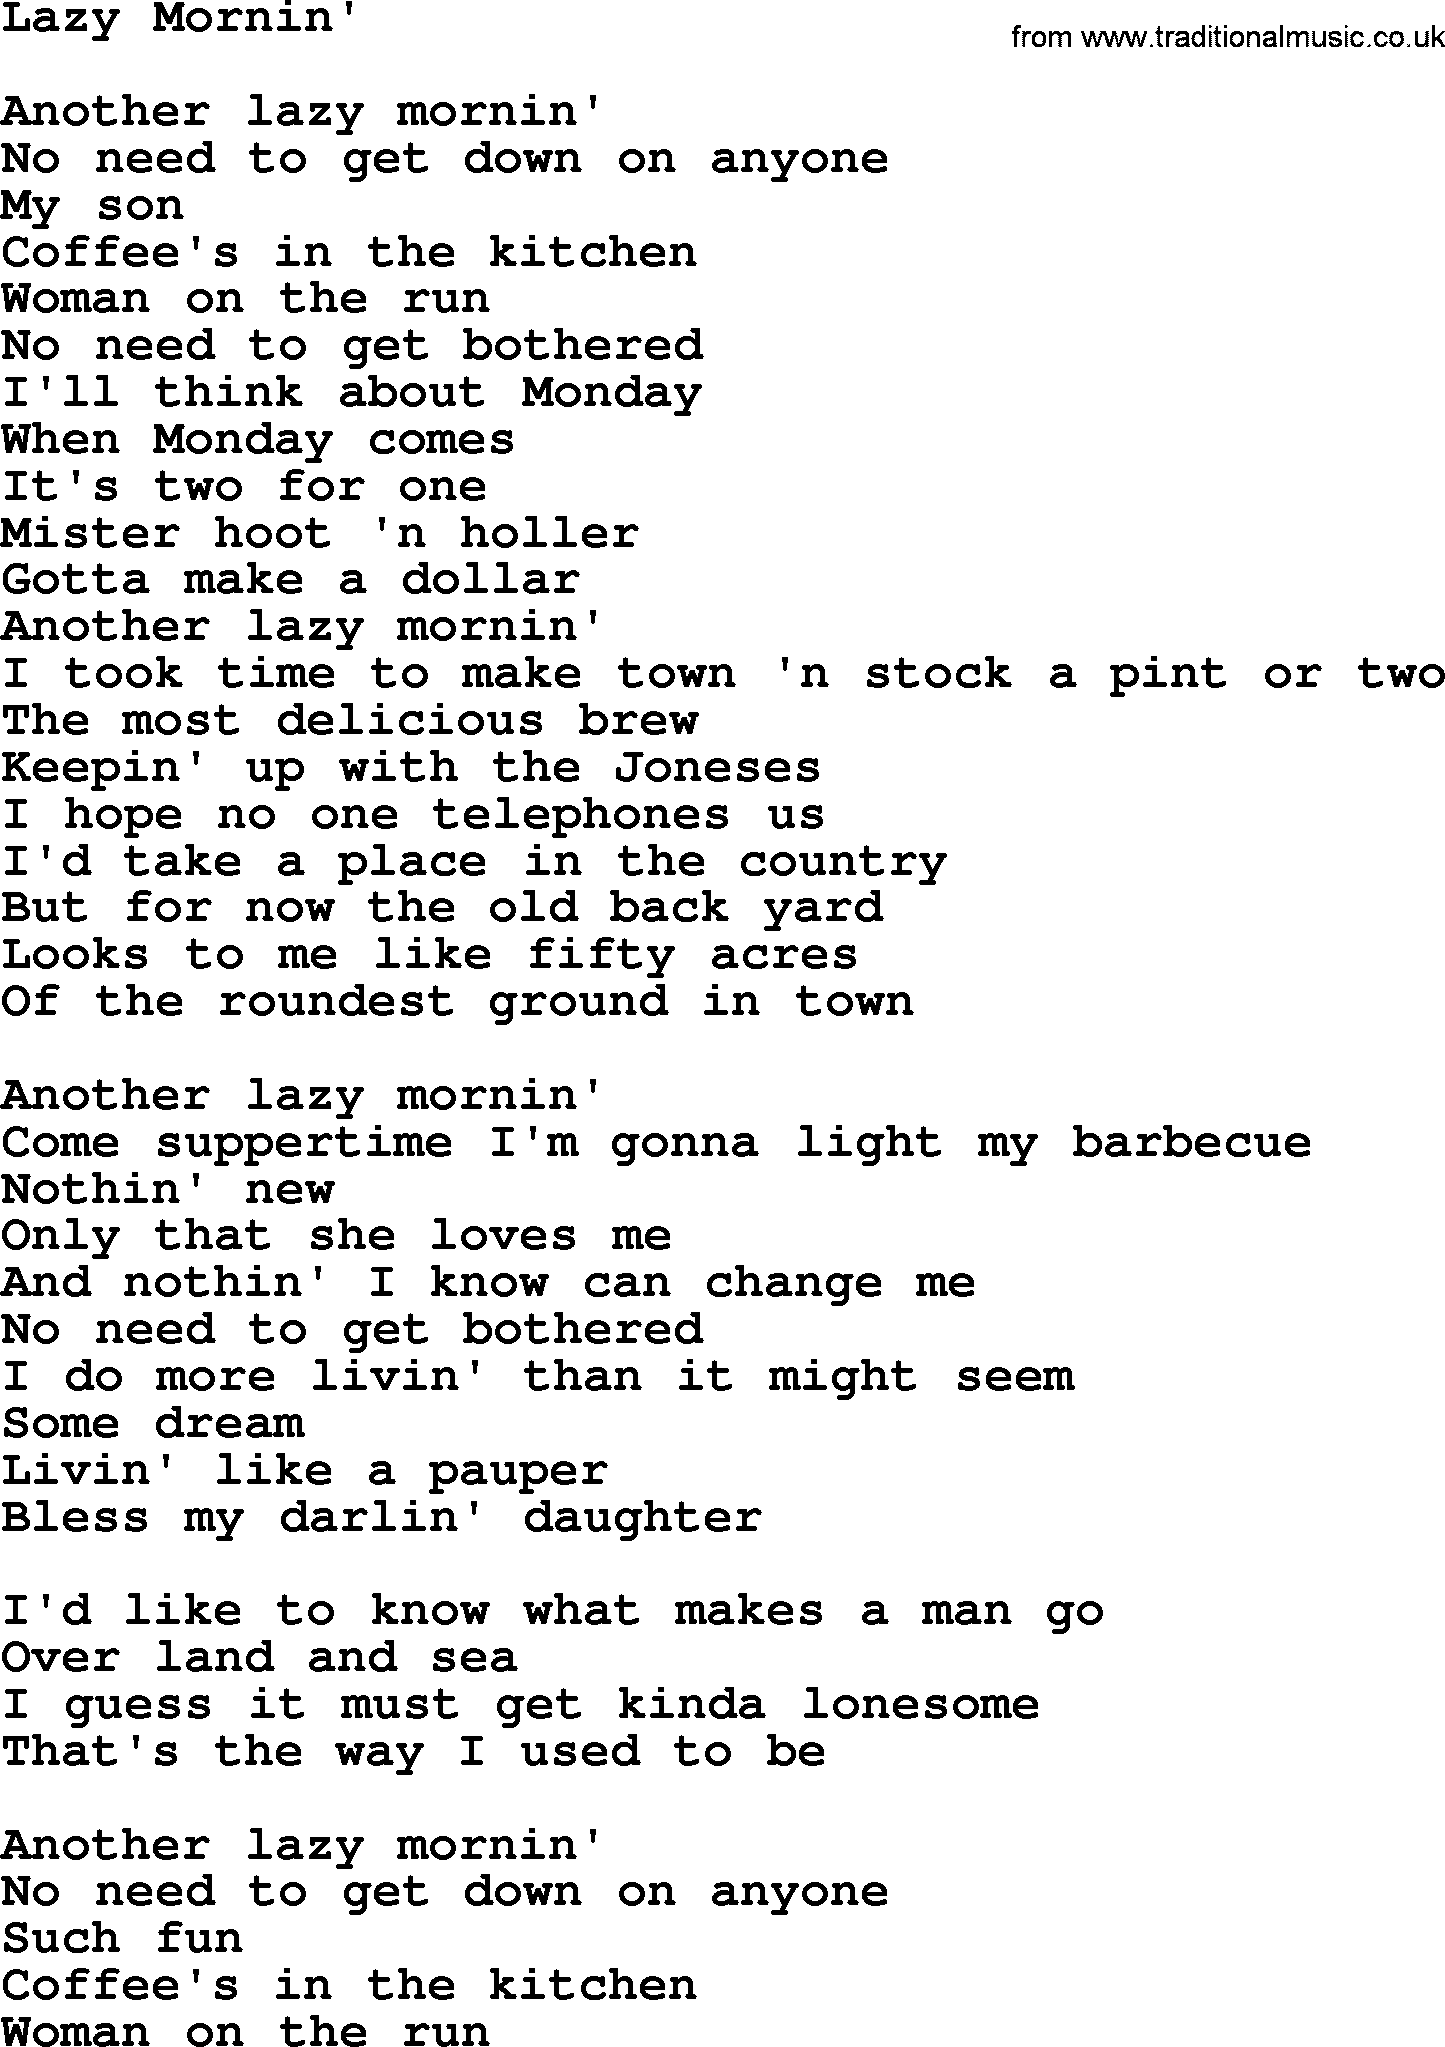 Gordon Lightfoot song Lazy Mornin', lyrics